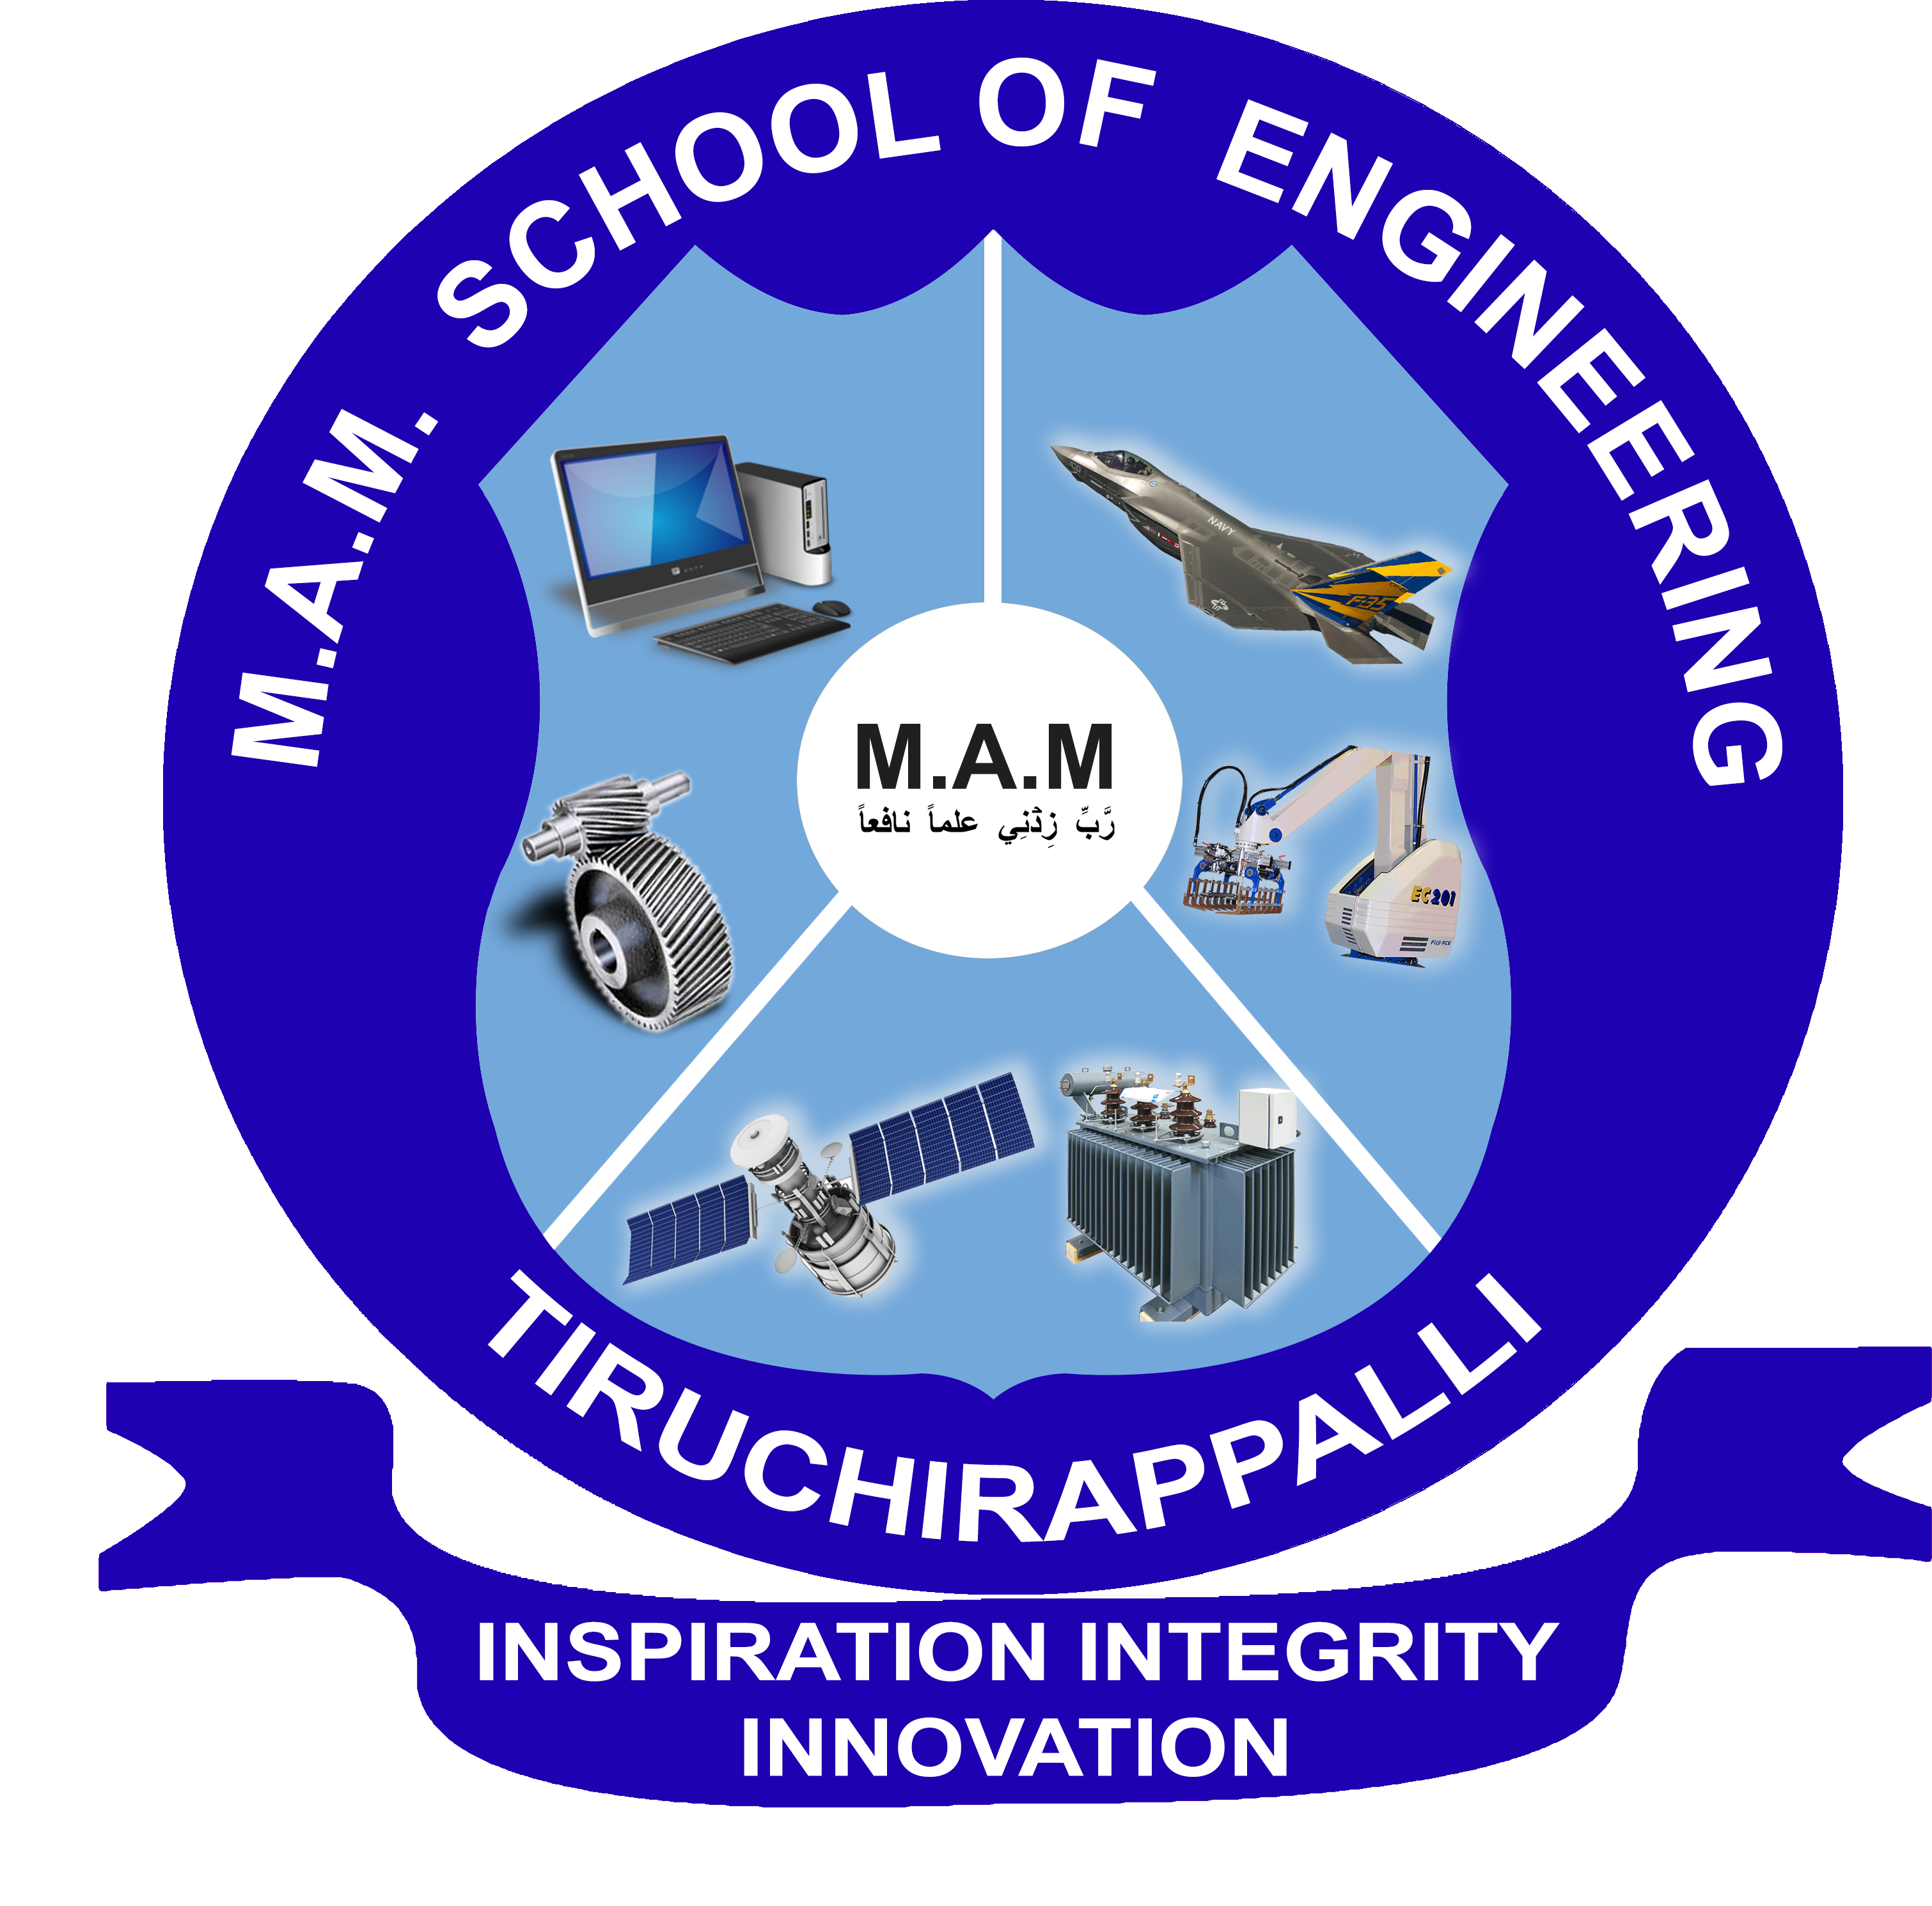 M.A.M School of Engineering